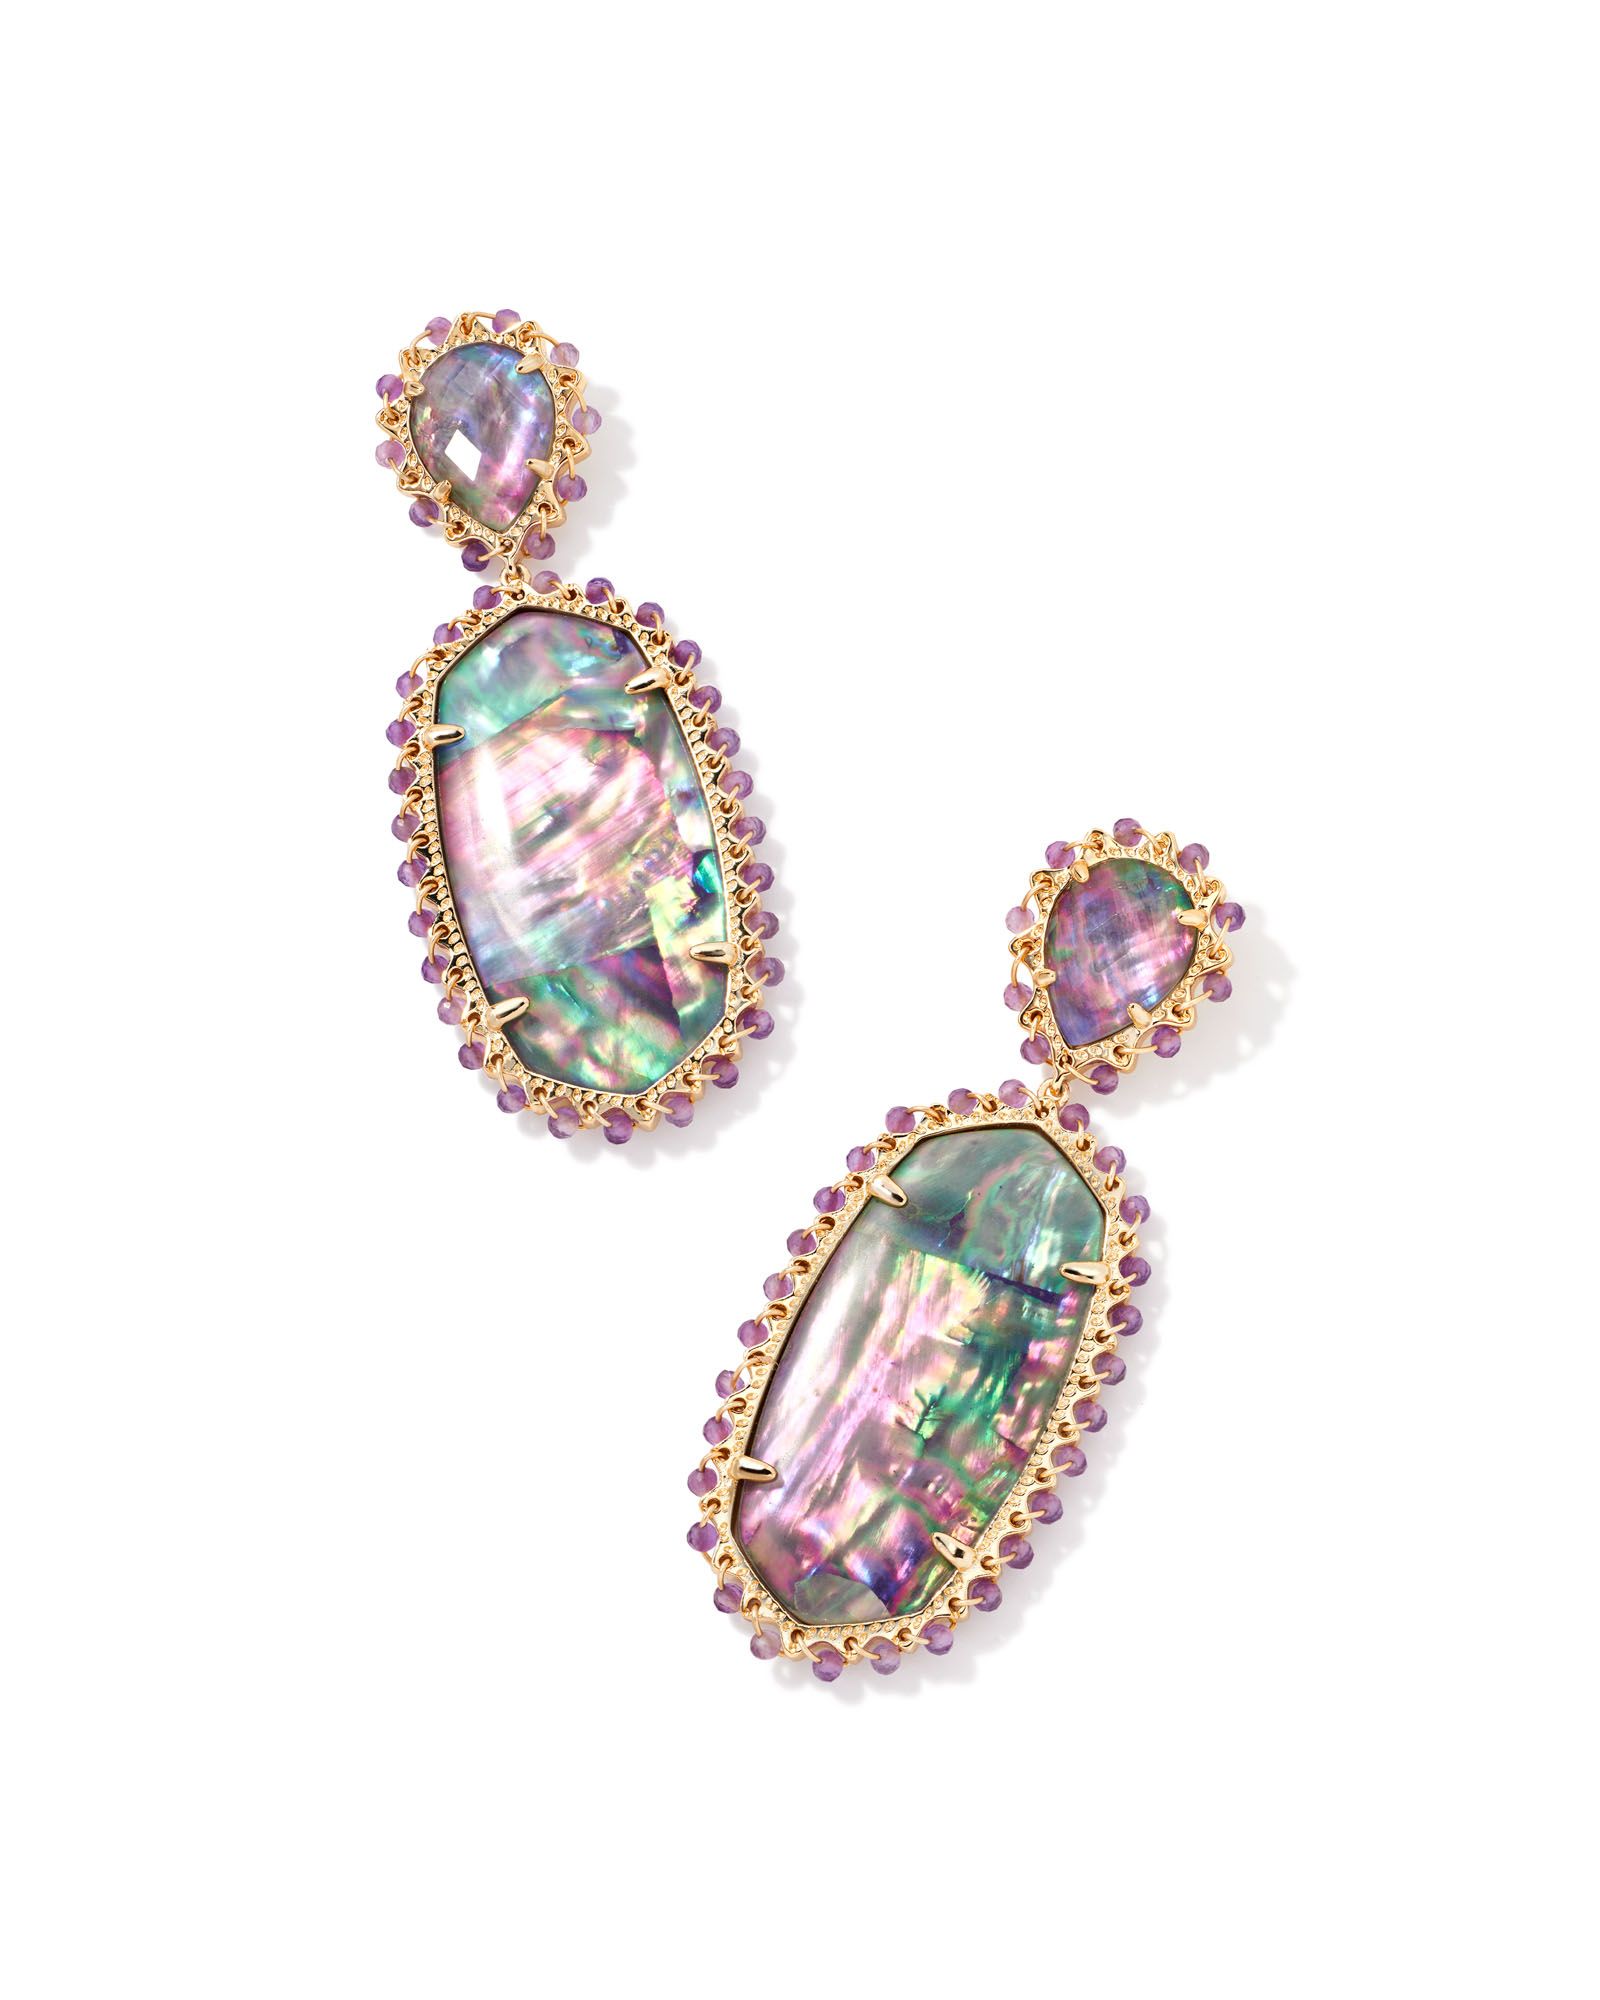 Parsons Gold Statement Earrings in Lilac Abalone | Kendra Scott | Kendra Scott